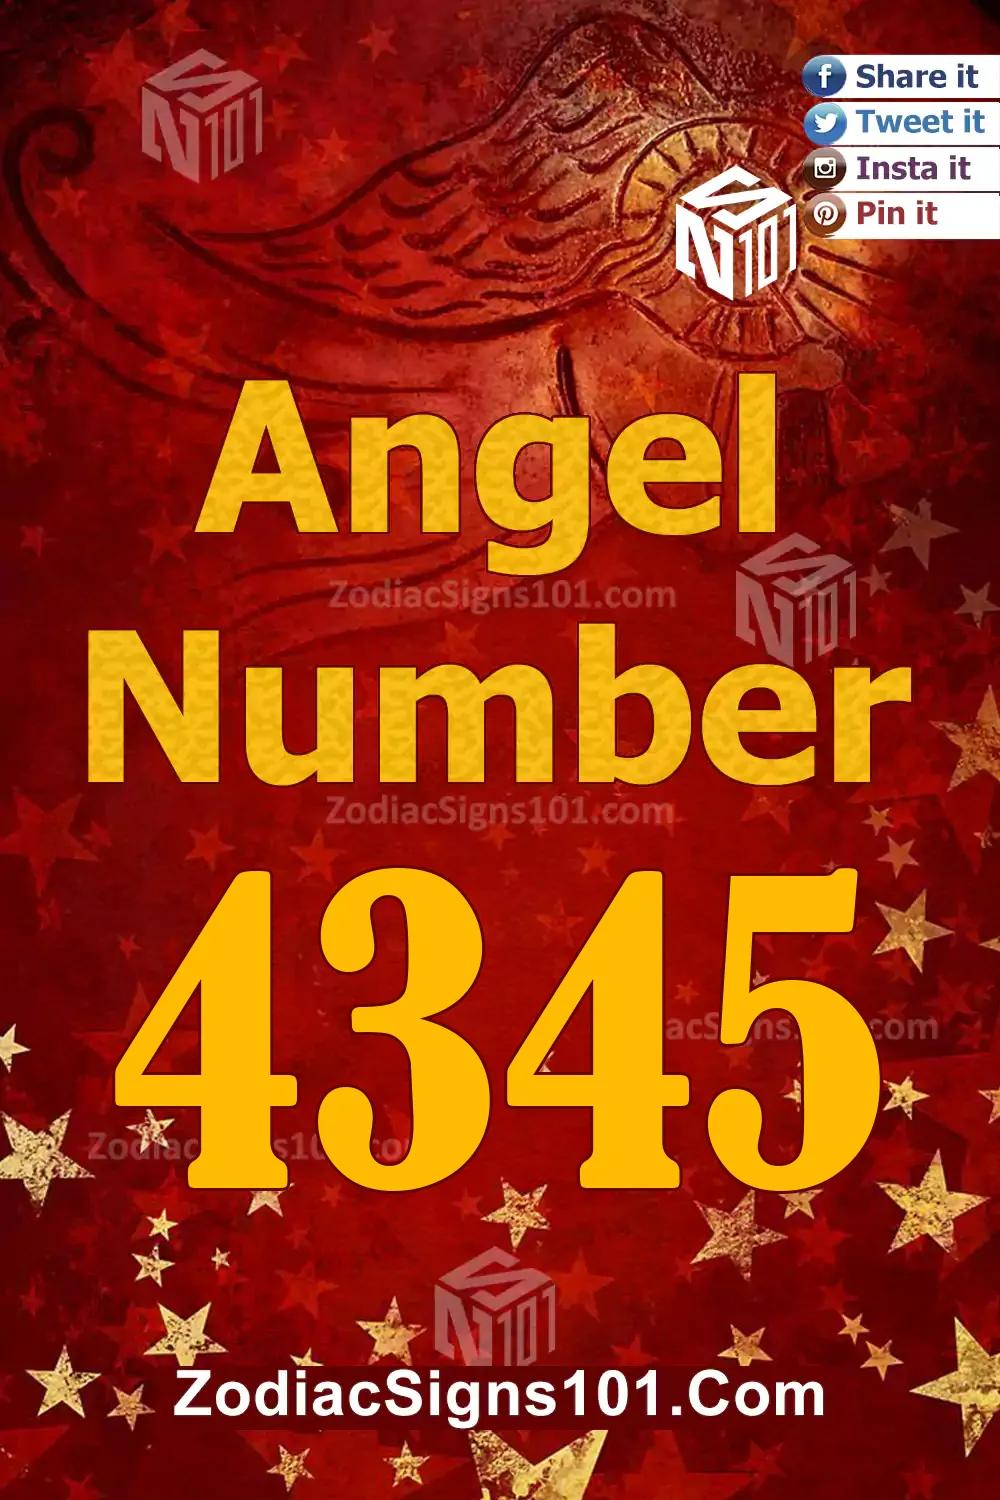 4345-Angel-Number-Meaning.jpg